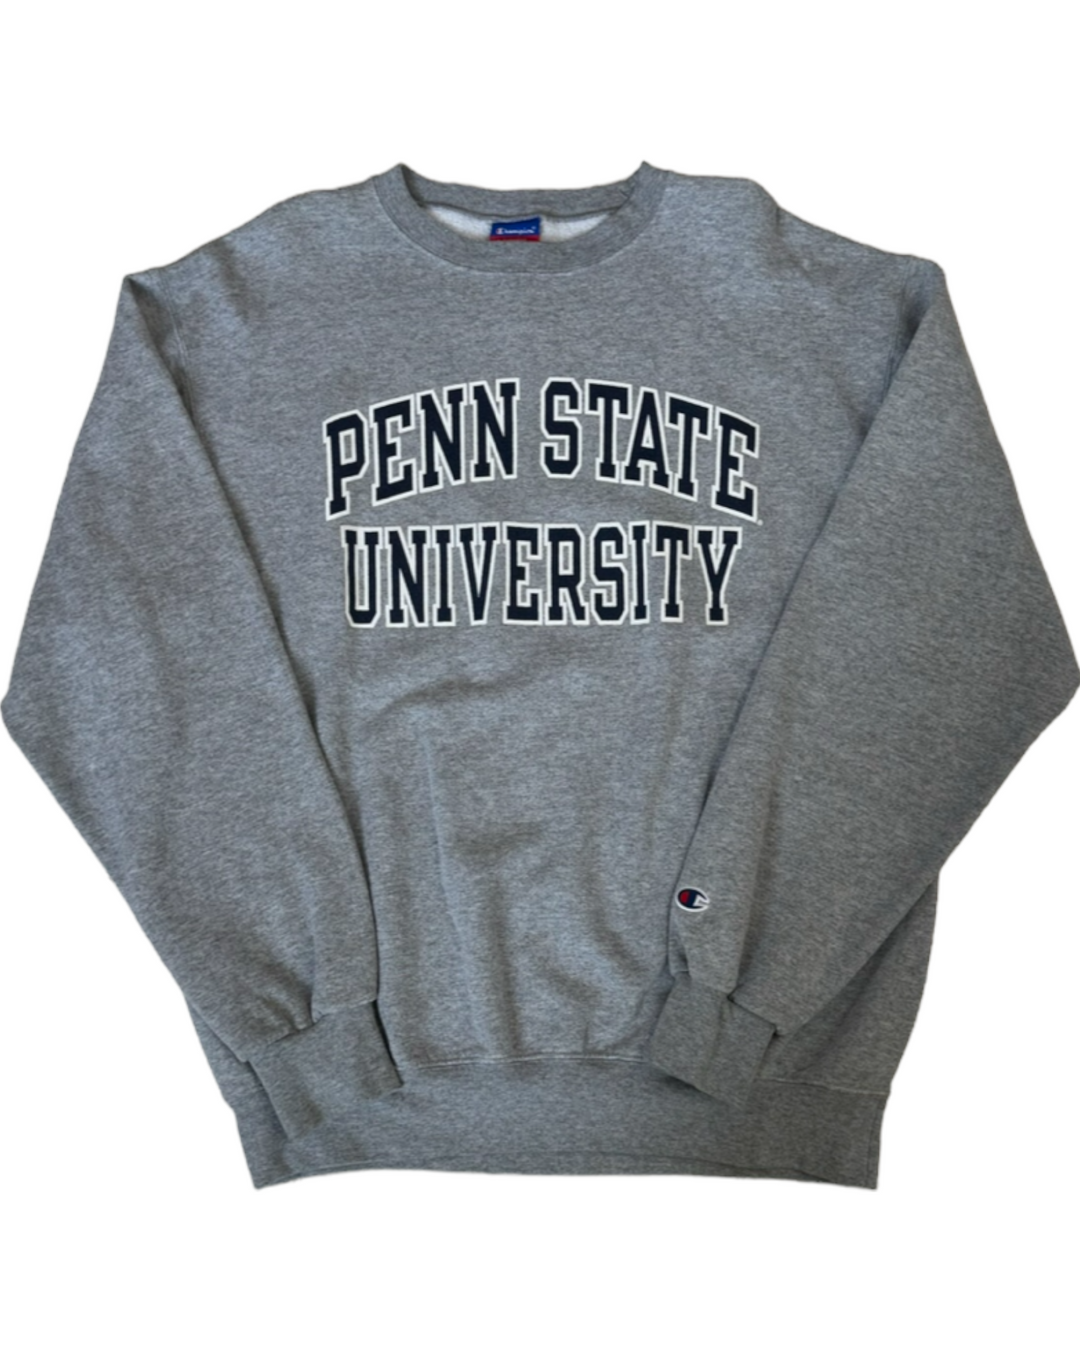 Penn State University Vintage Sweatshirt